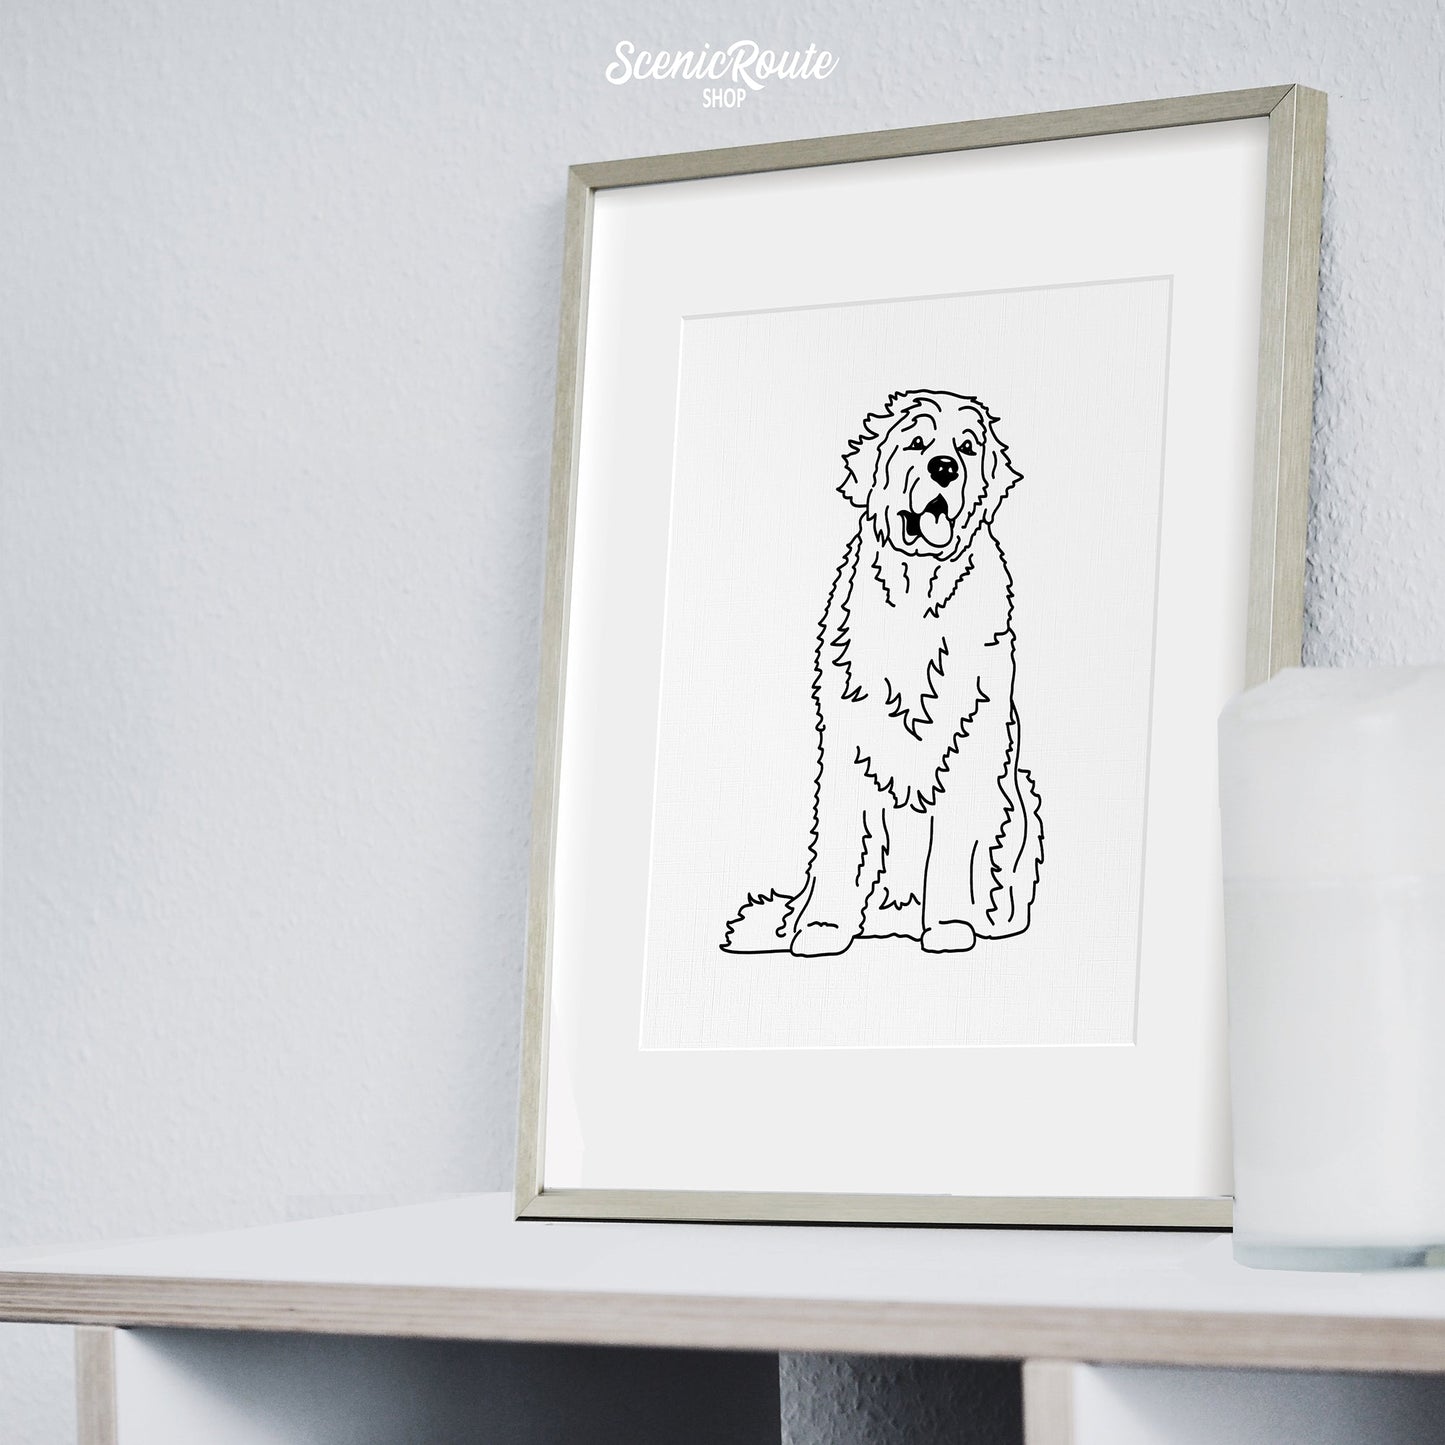 A framed line art drawing of a Newfoundland dog on a bookshelf